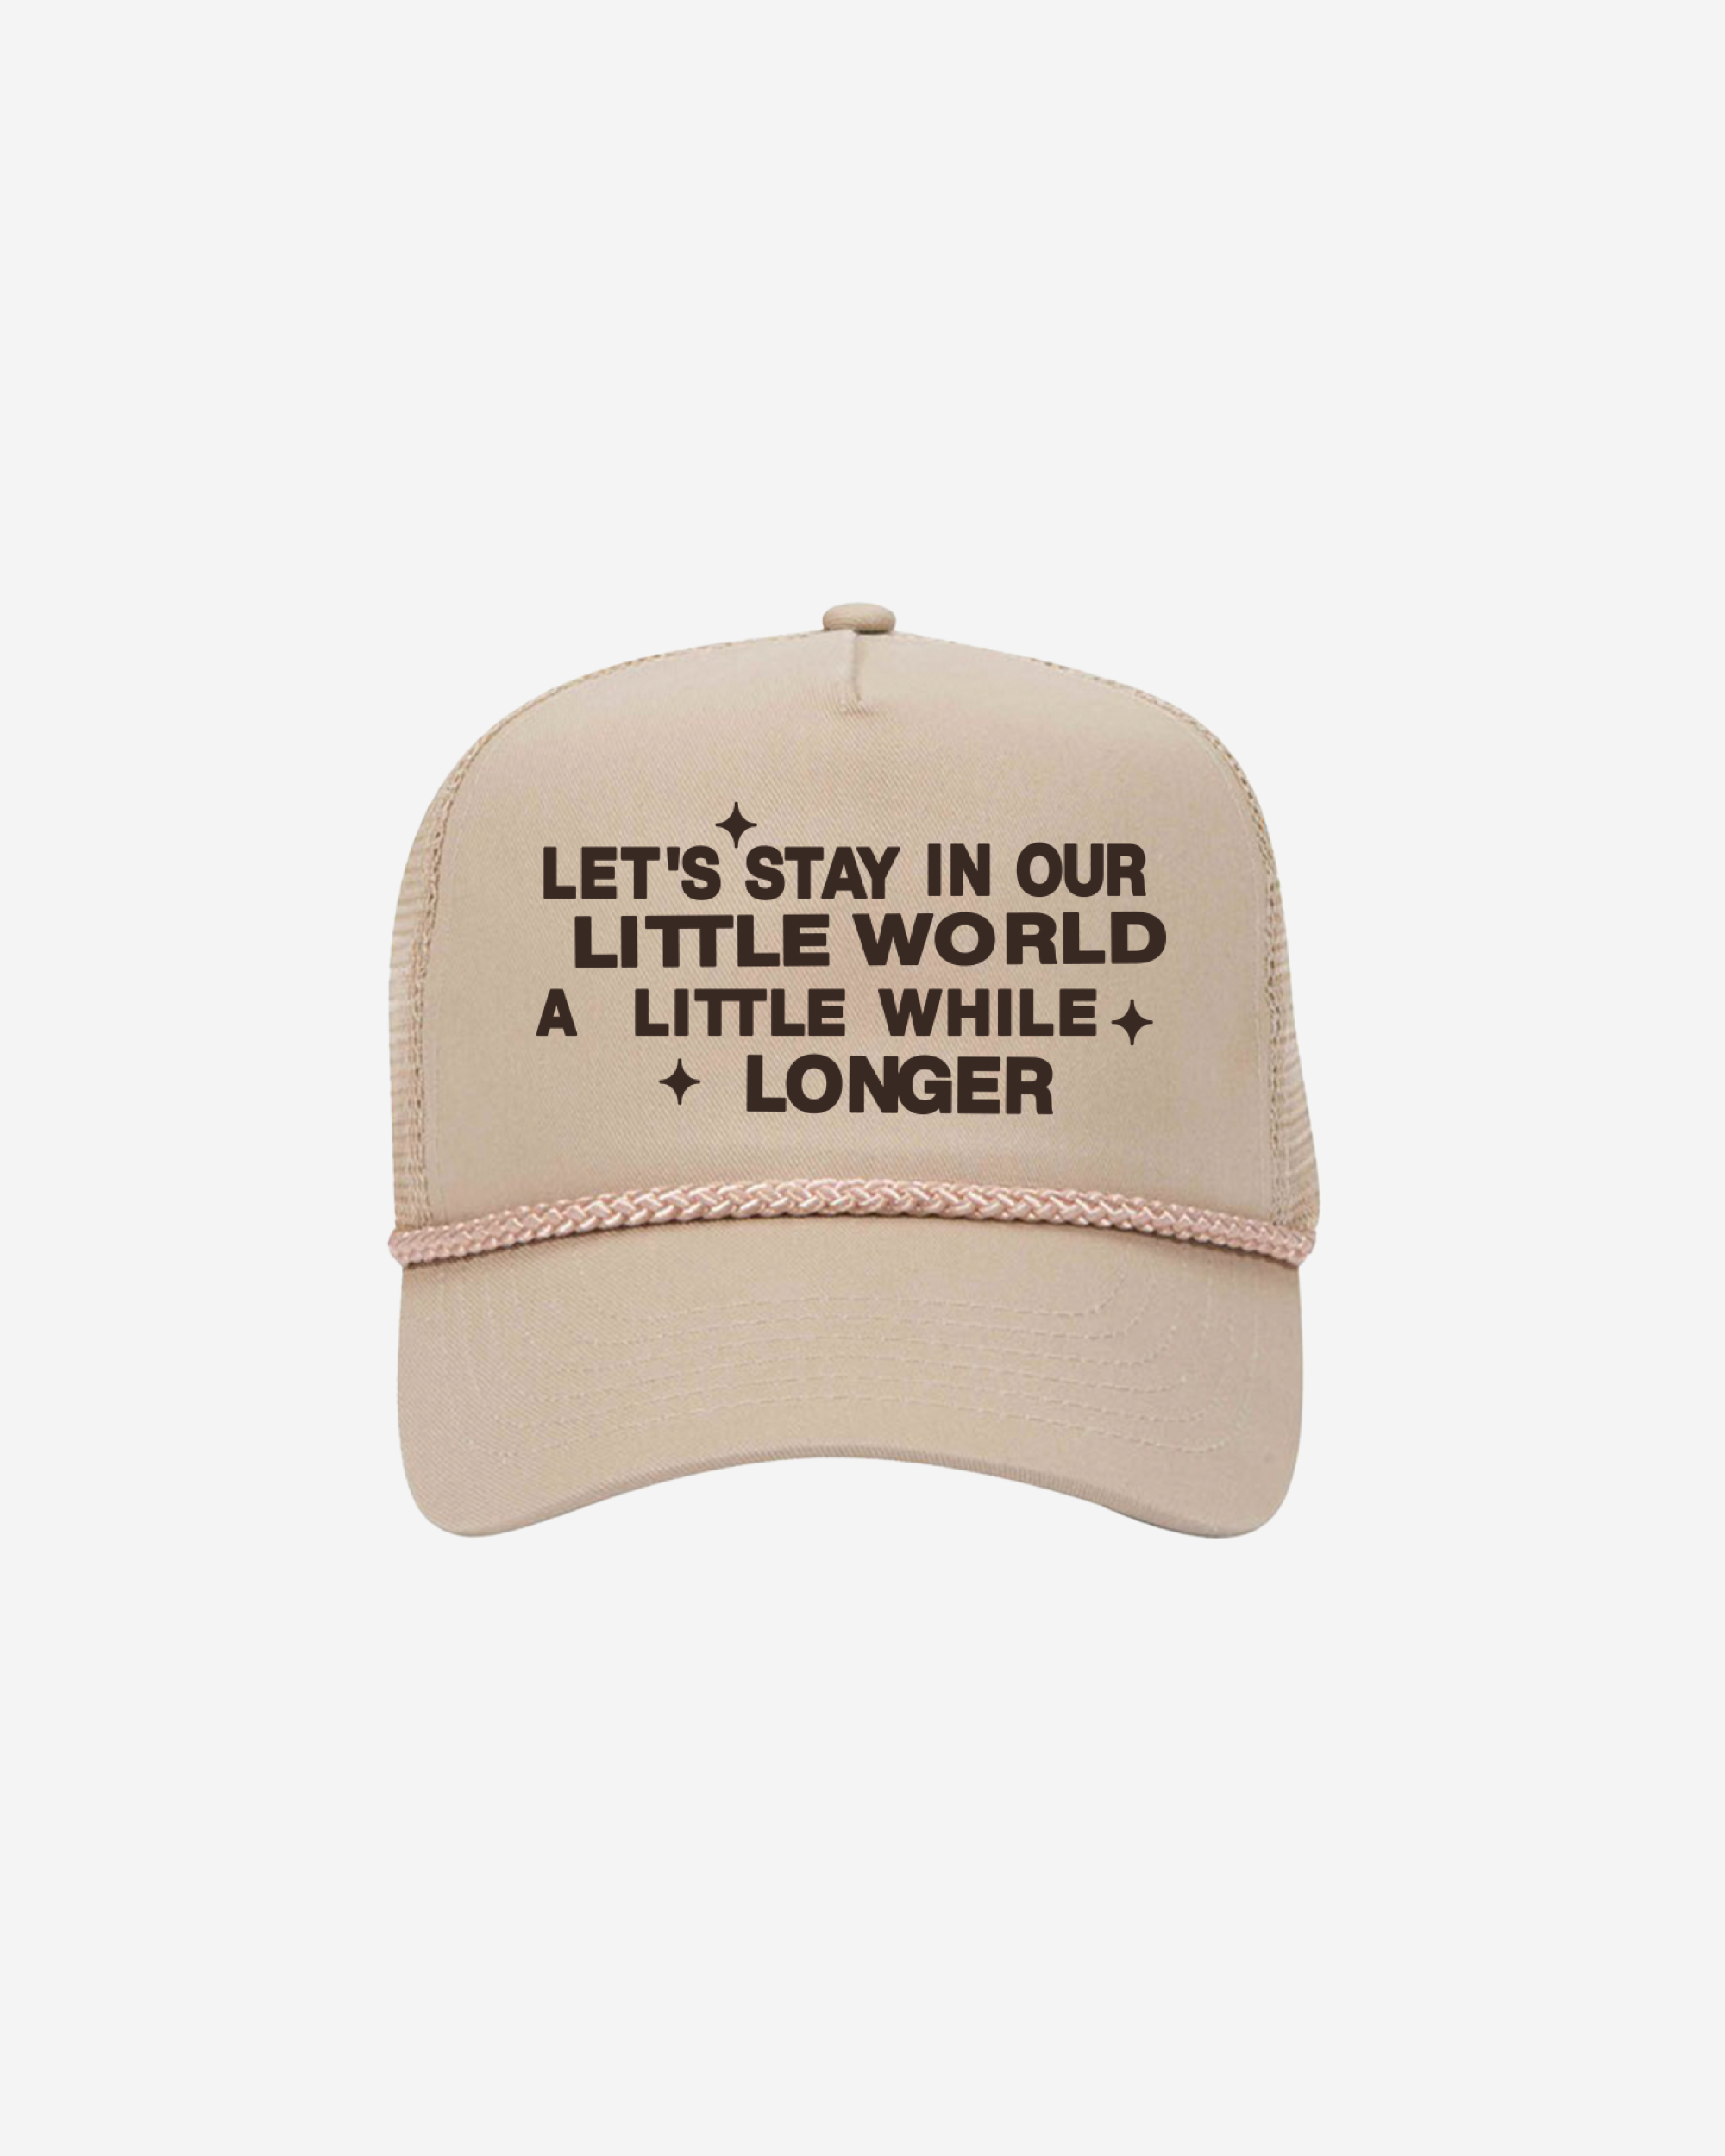 Our Little World Trucker Hat